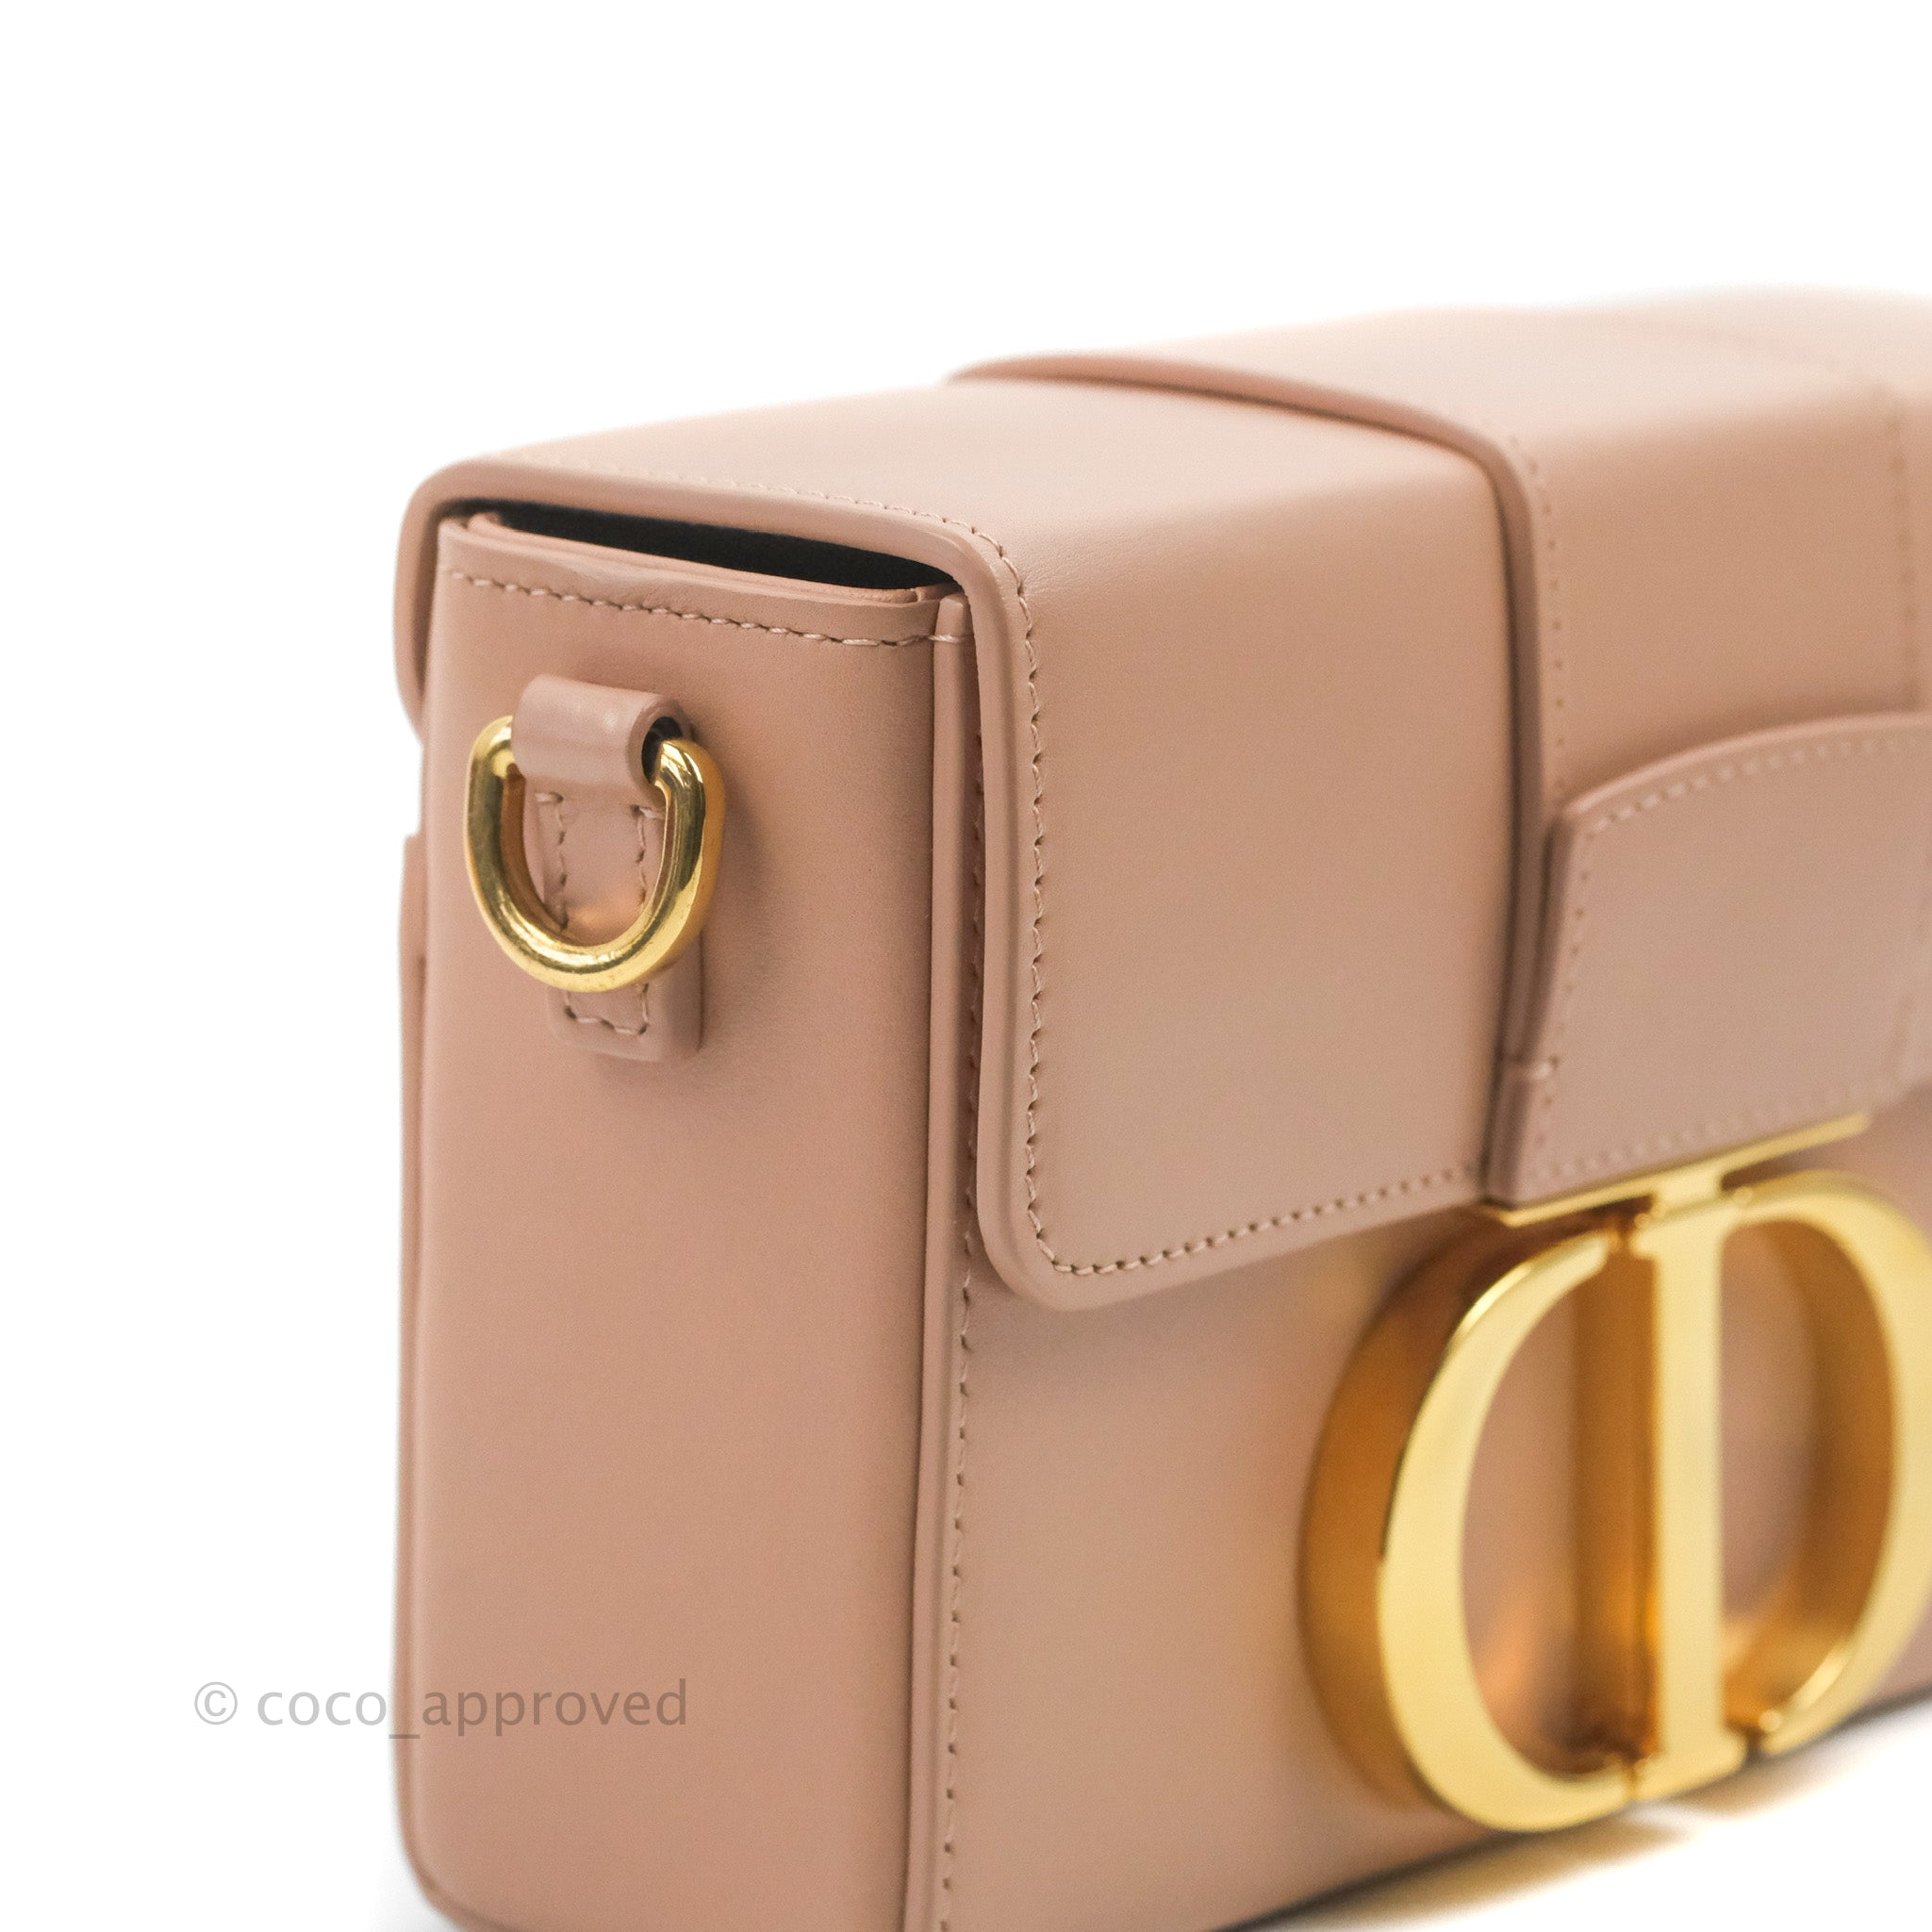 Dior - 30 Montaigne Box Bag - Pink Calfskin - GHW